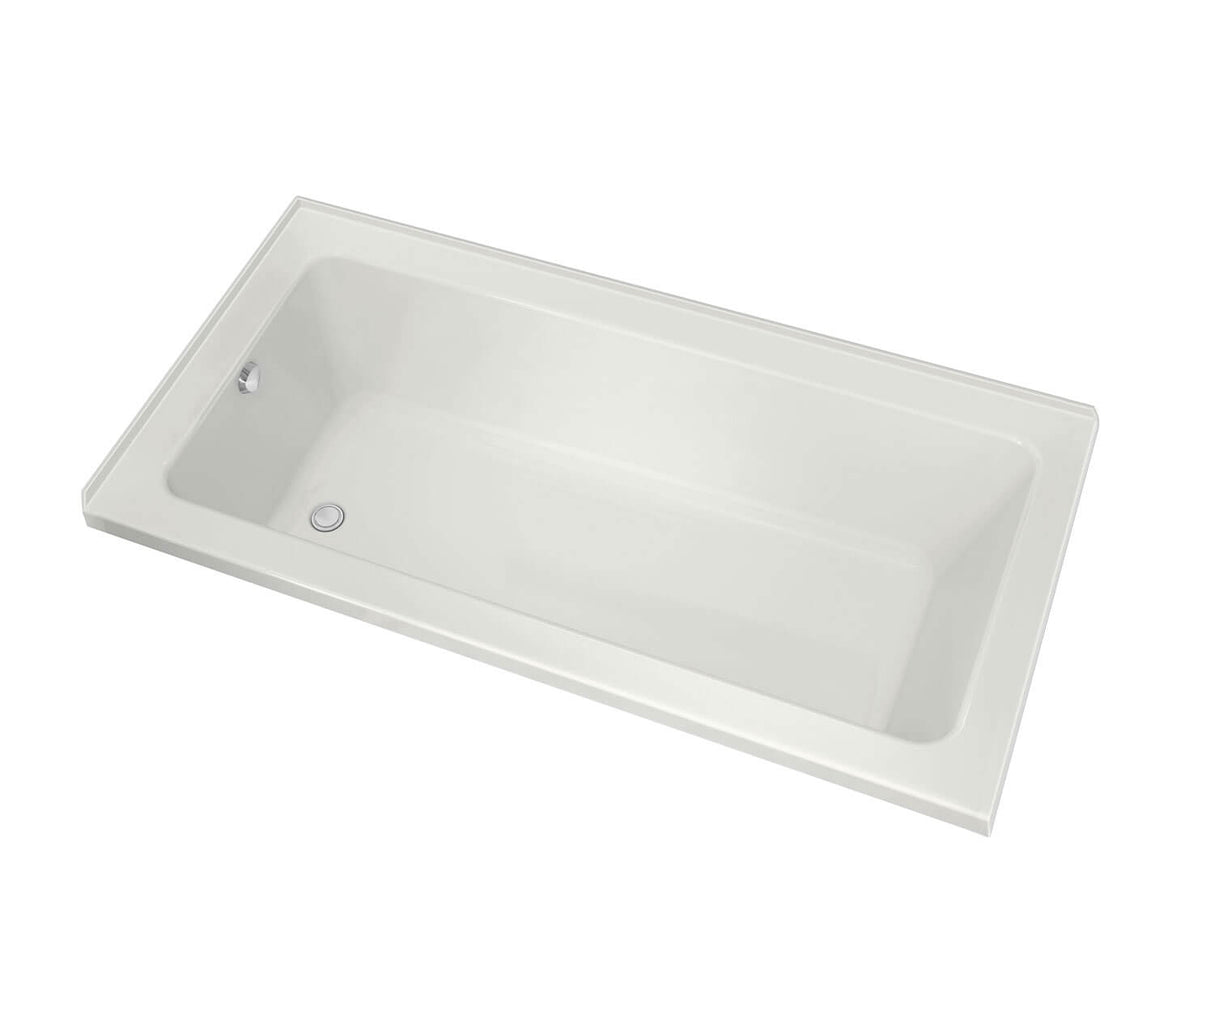 MAAX 106214-000-001-108 Pose 7242 IF Acrylic Corner Left Right-Hand Drain Bathtub in White